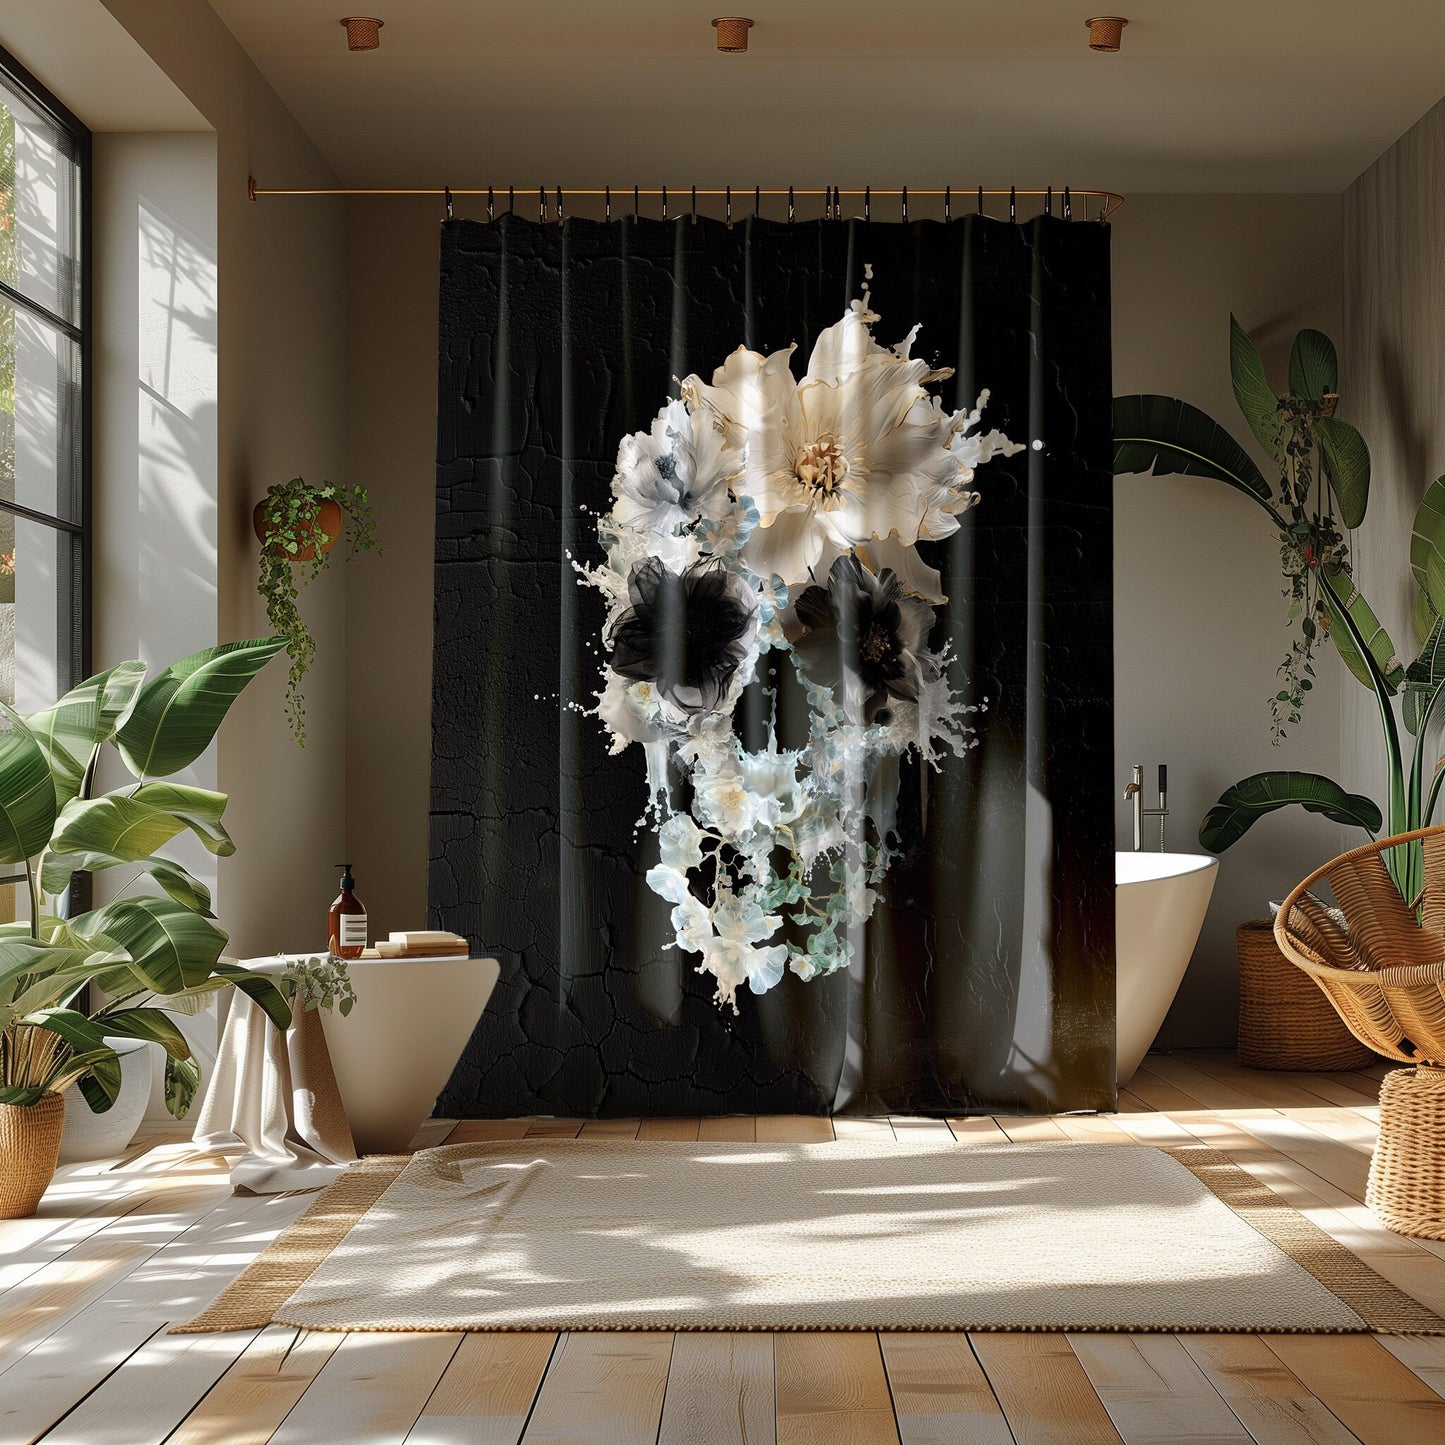 Bloom Skull Shower Curtain, Boho Shower Curtain Bathroom Decor, Gothic Sugar Skull Shower Curtain Home Decor